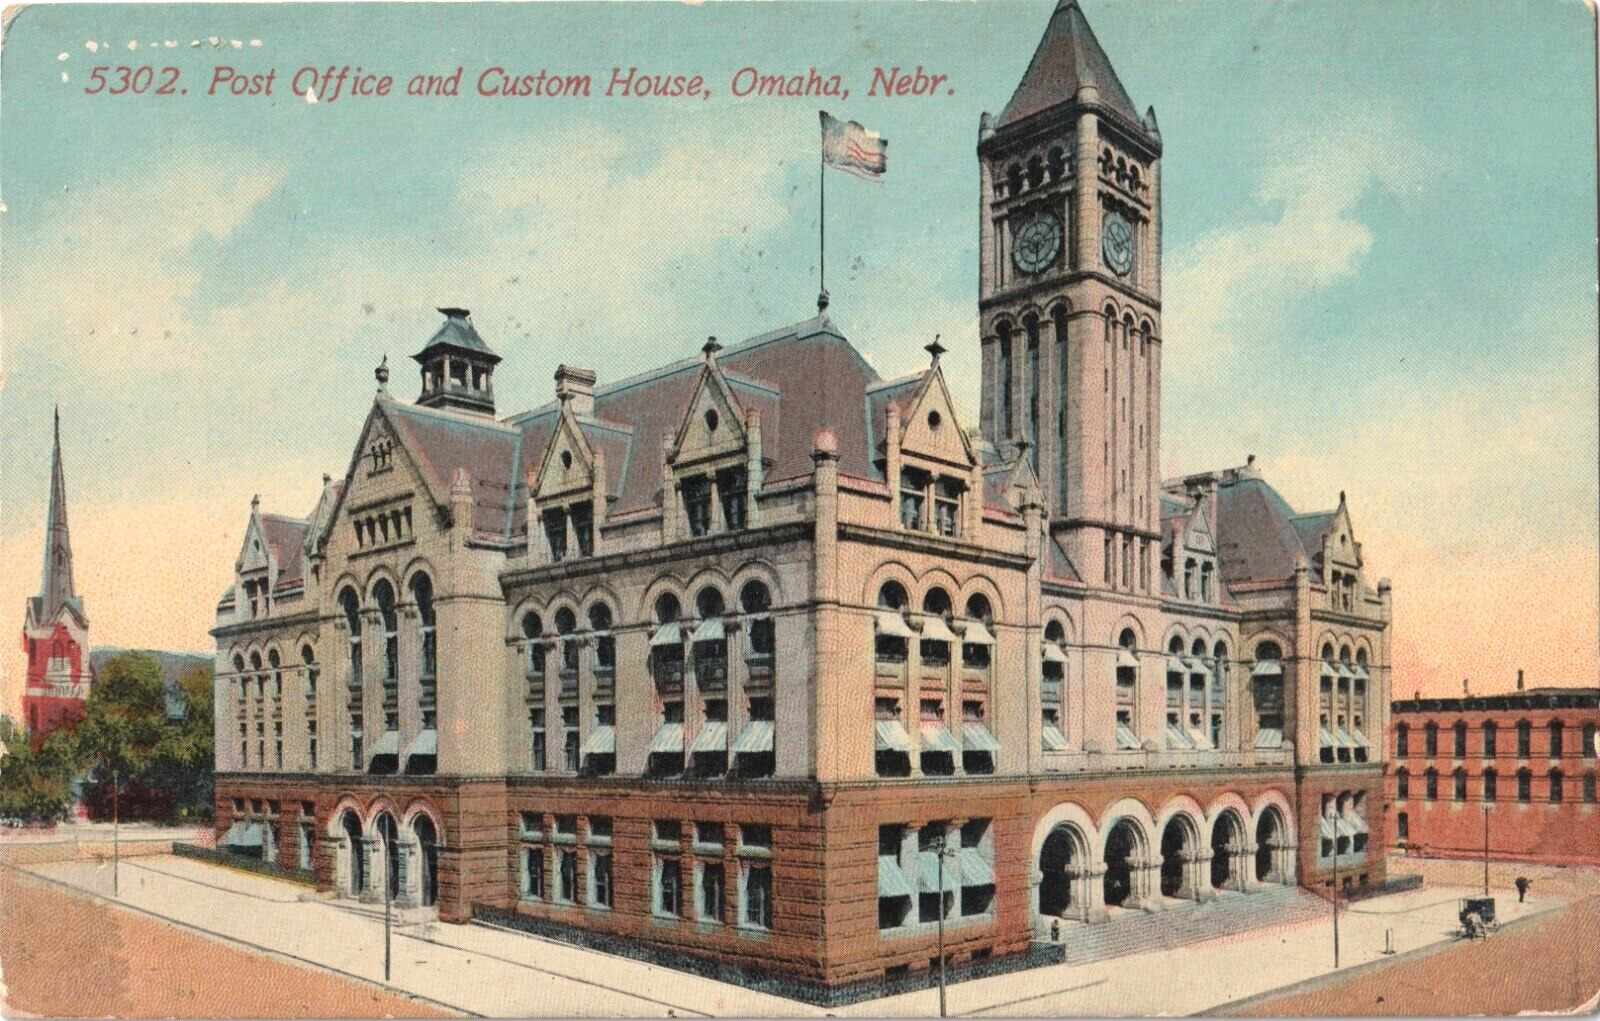 Post Office and Custom House-Omaha, Nebraska NE-antique postcard